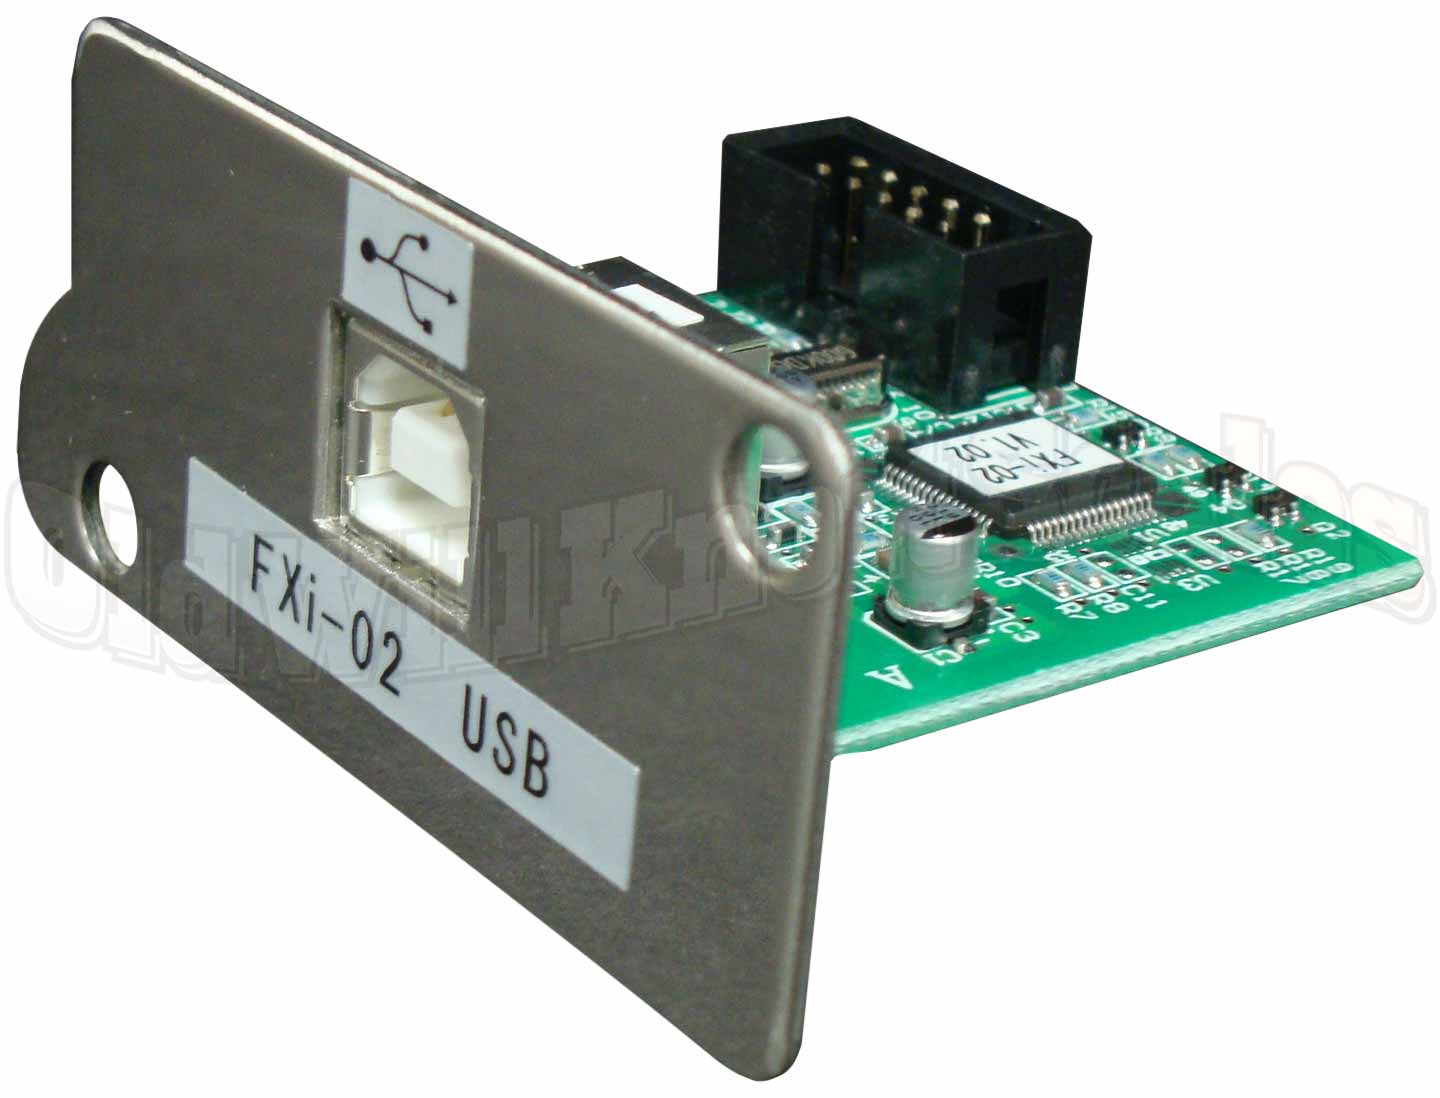 A&D FXI-02 USB Interface